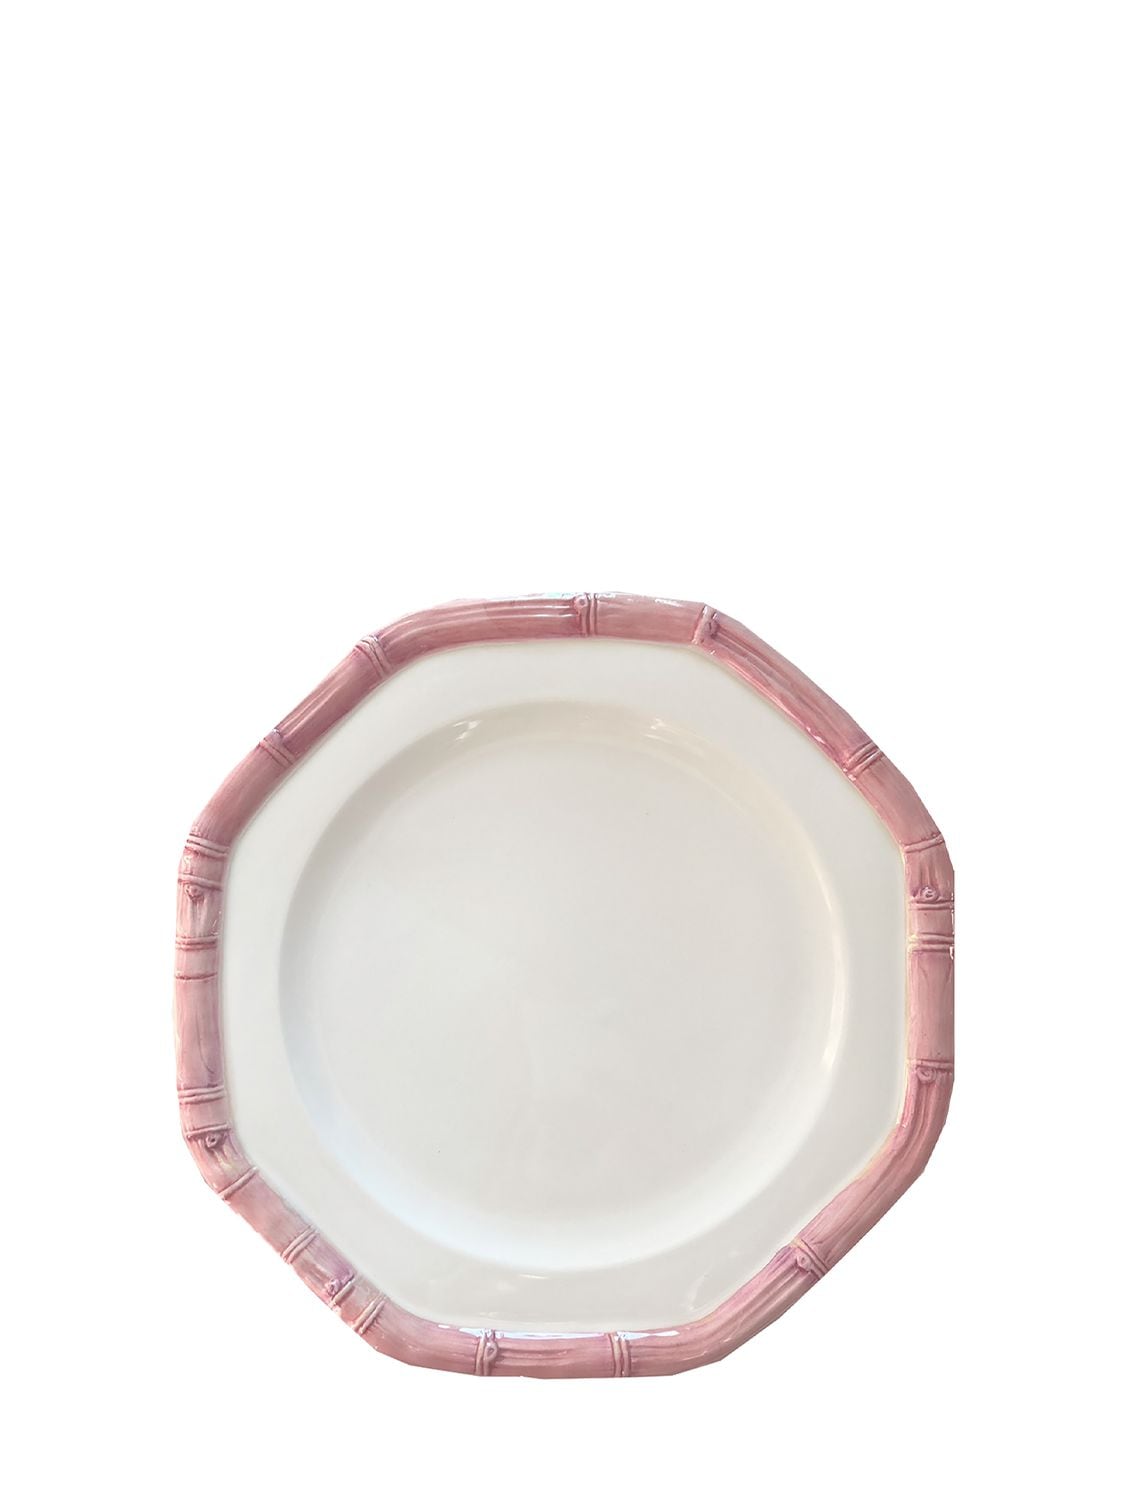 Image of Bamboo Ceramic Plate